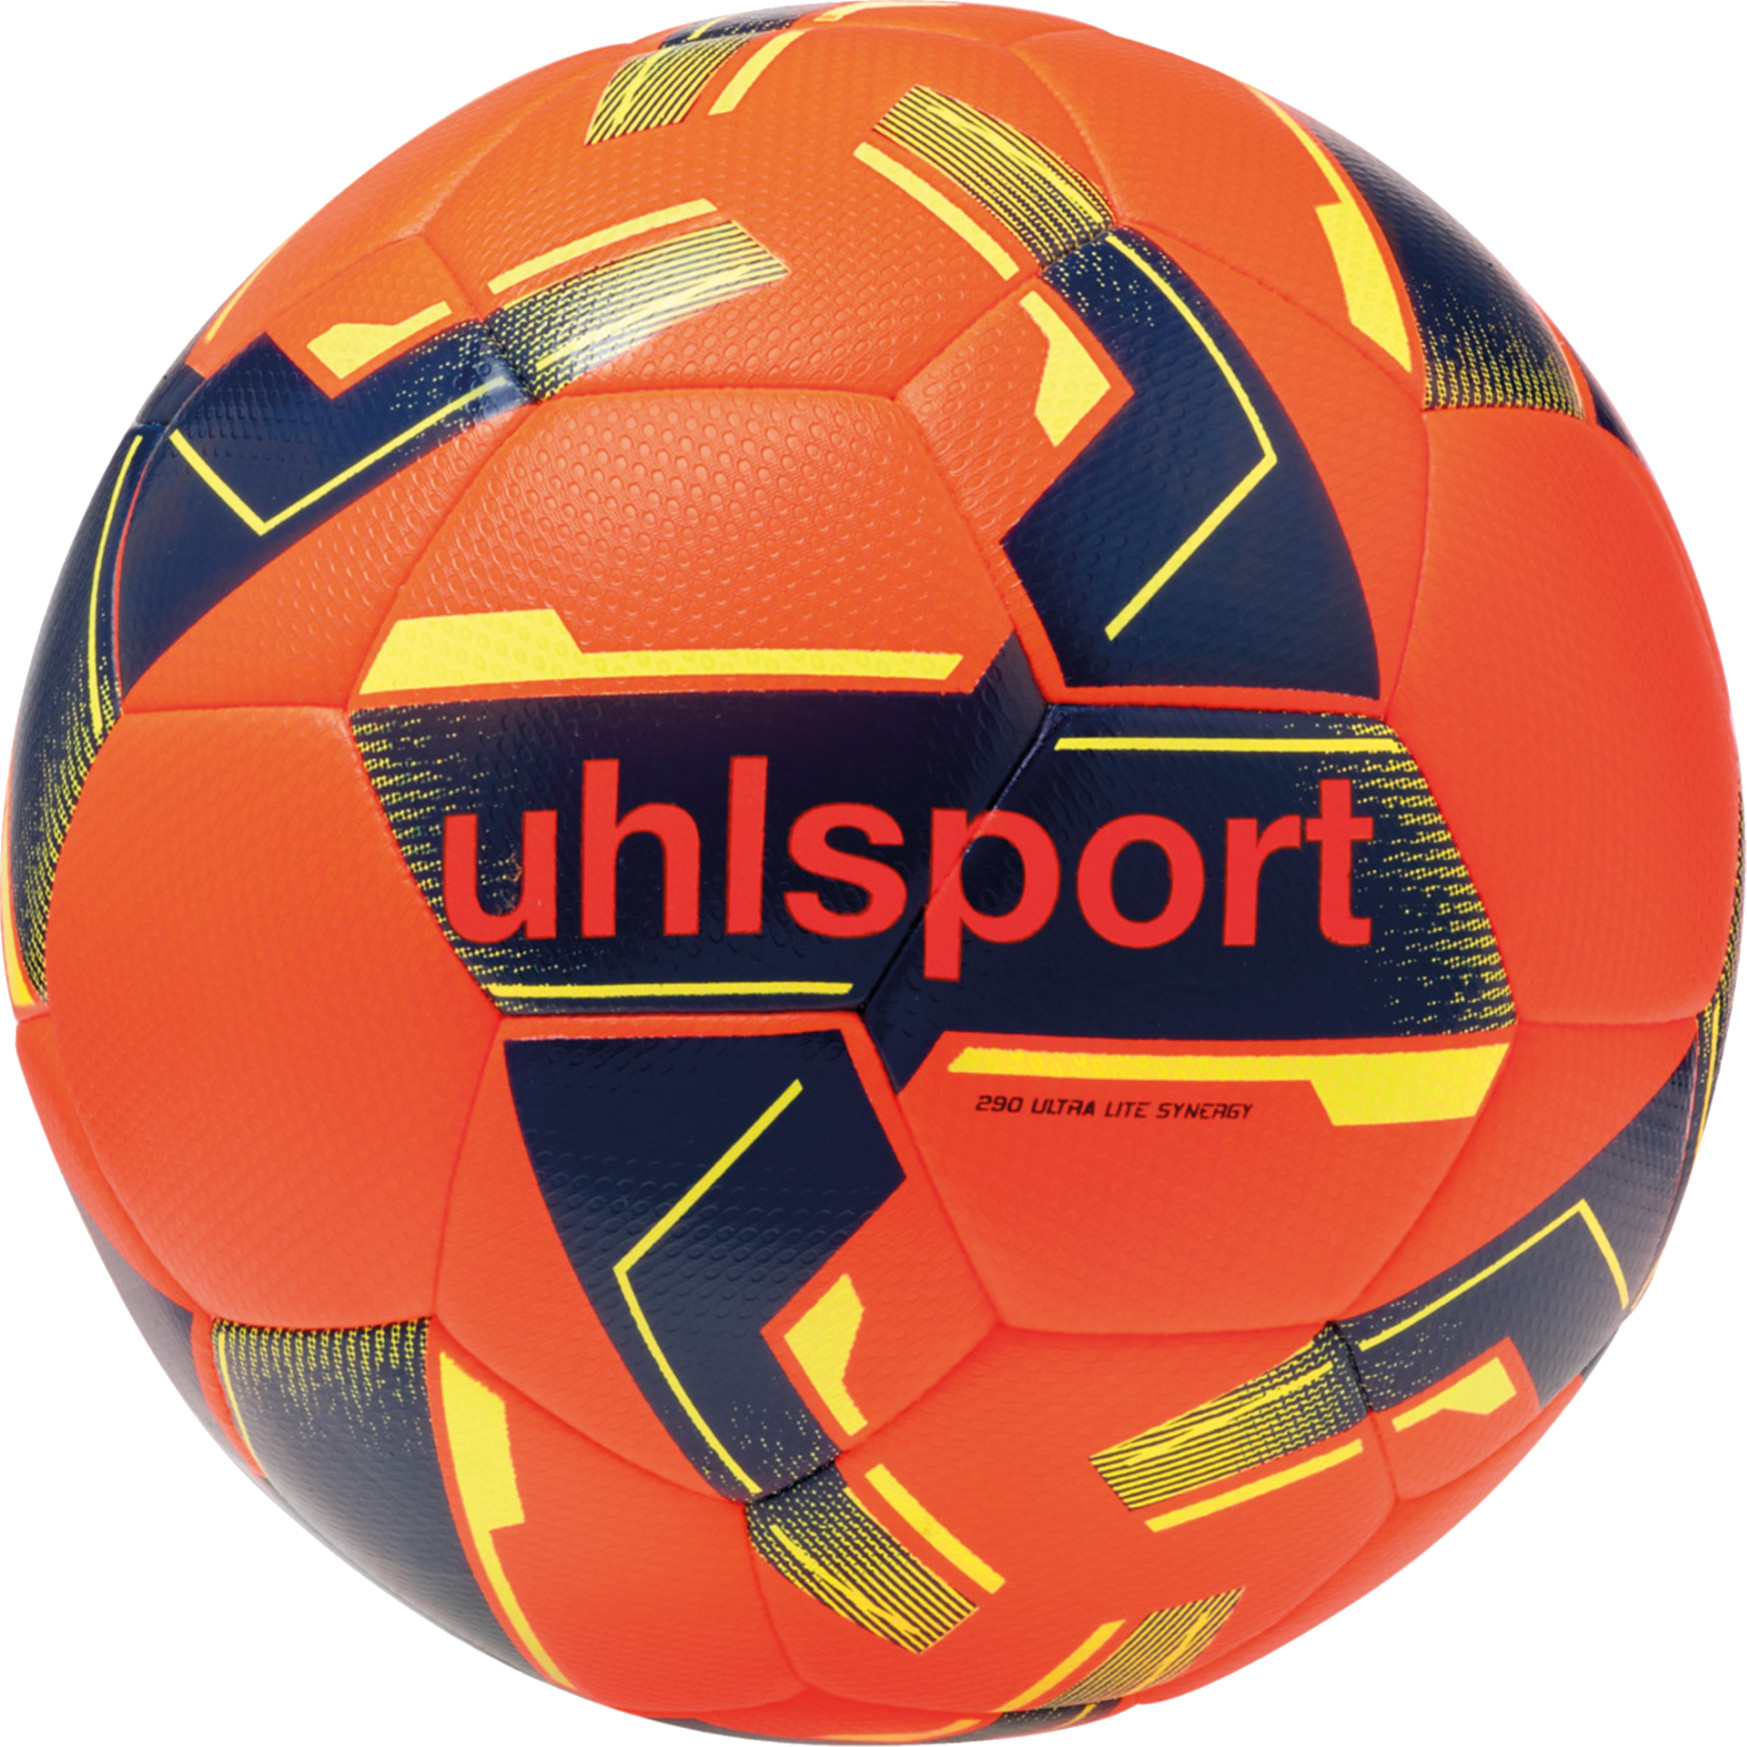 Uhlsport Synergy Ultra 290g Lightball Labda